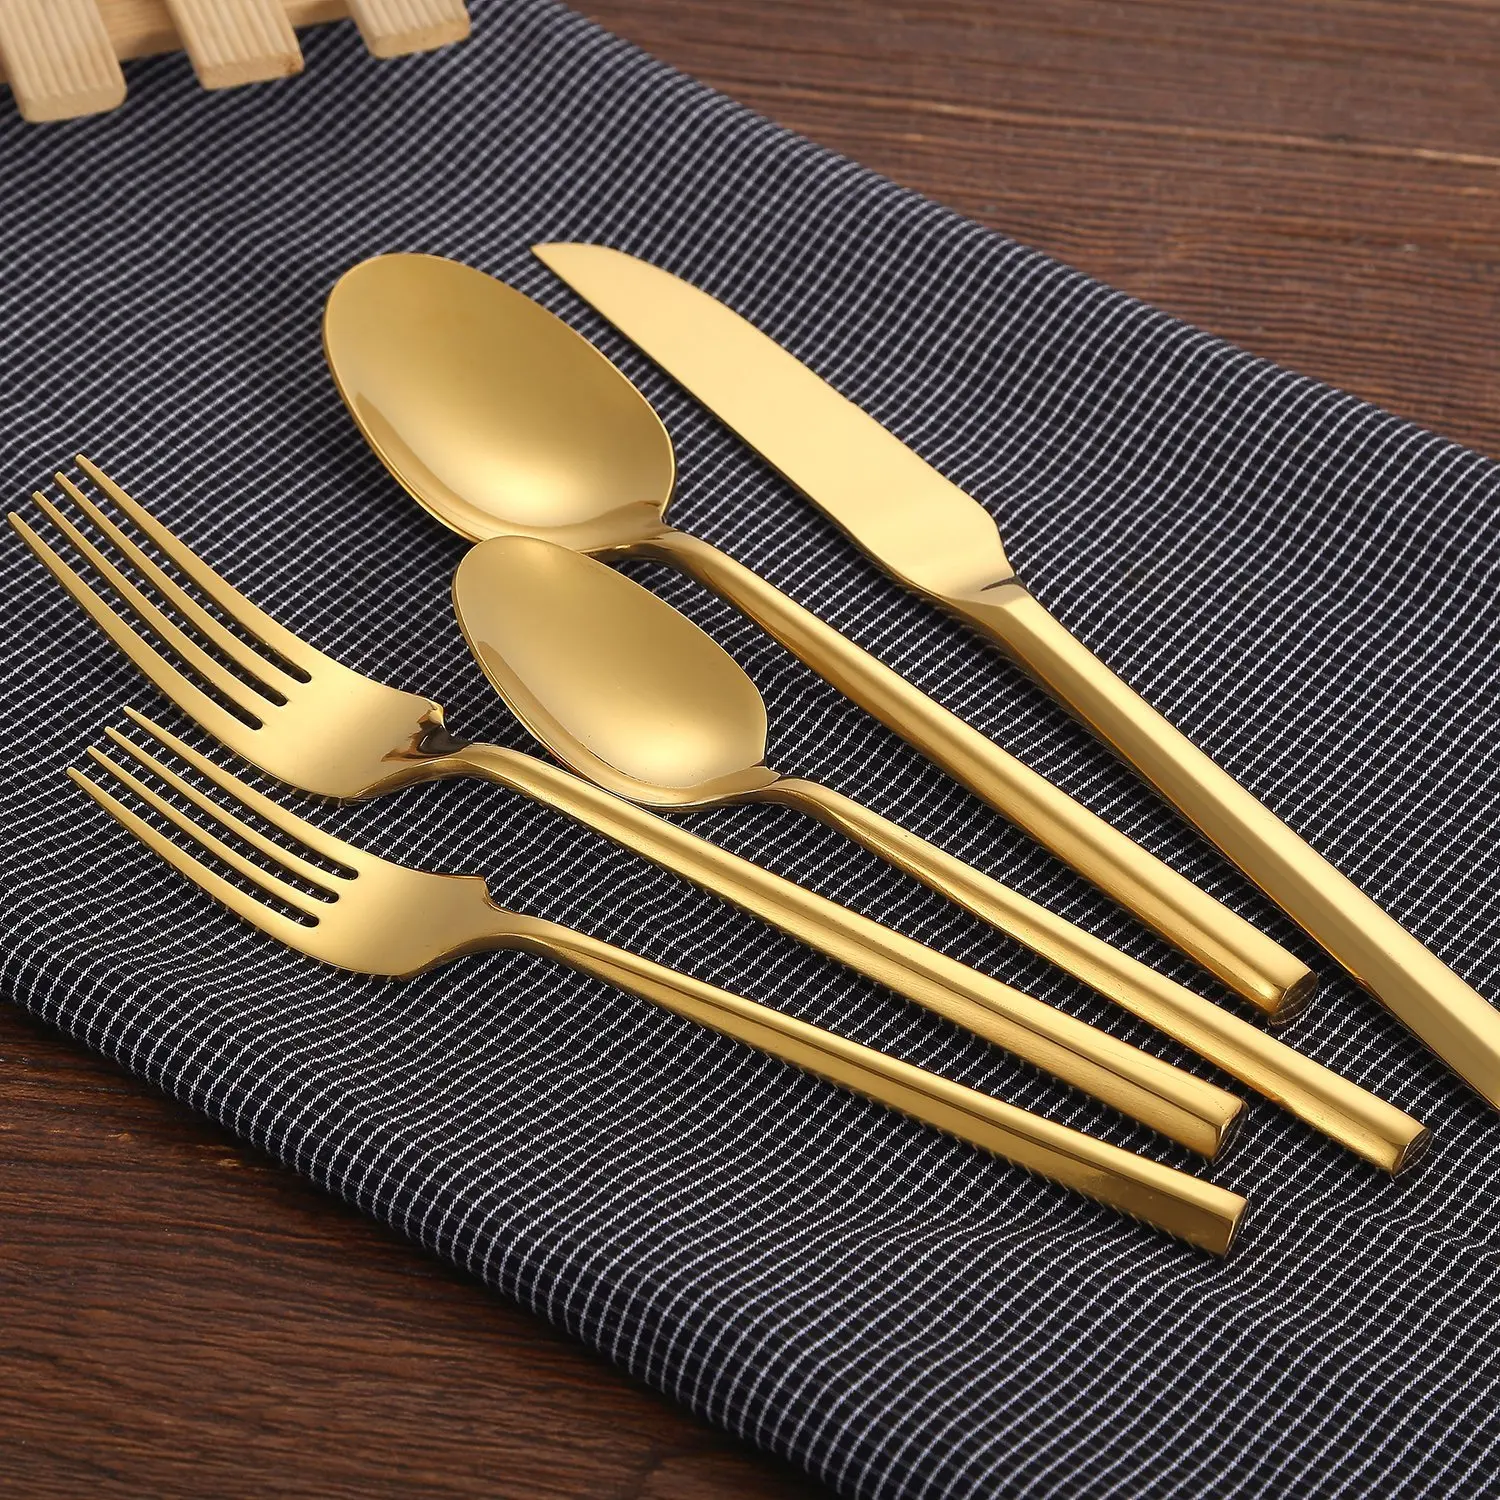 italian cutlery sets